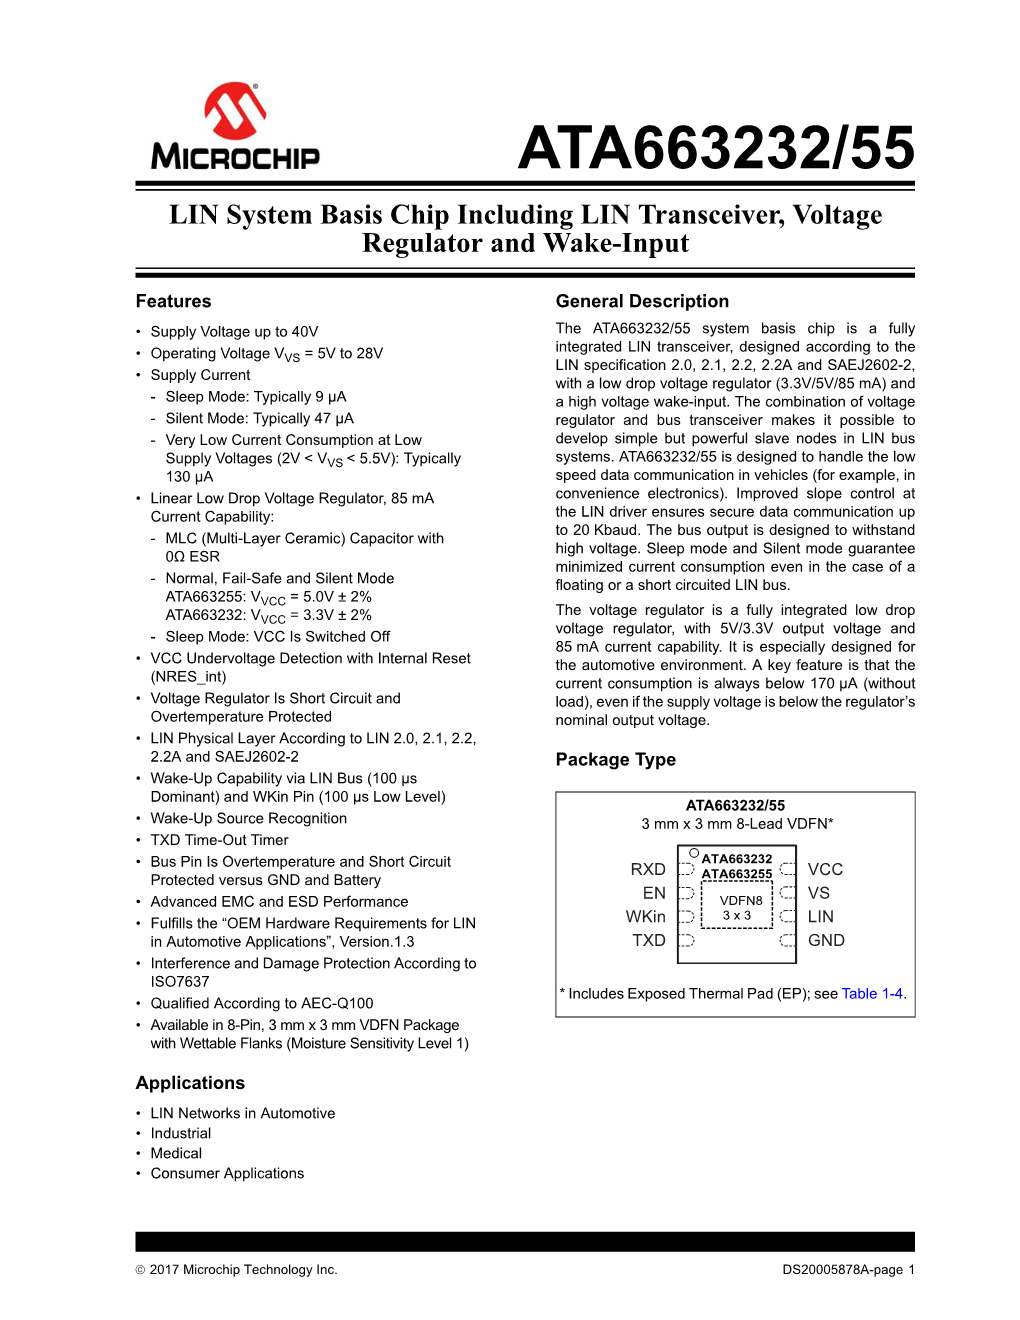 ATA663232/55 LIN System Basis Chip Including LIN Transceiver, Voltage Regulator and Wake-Input